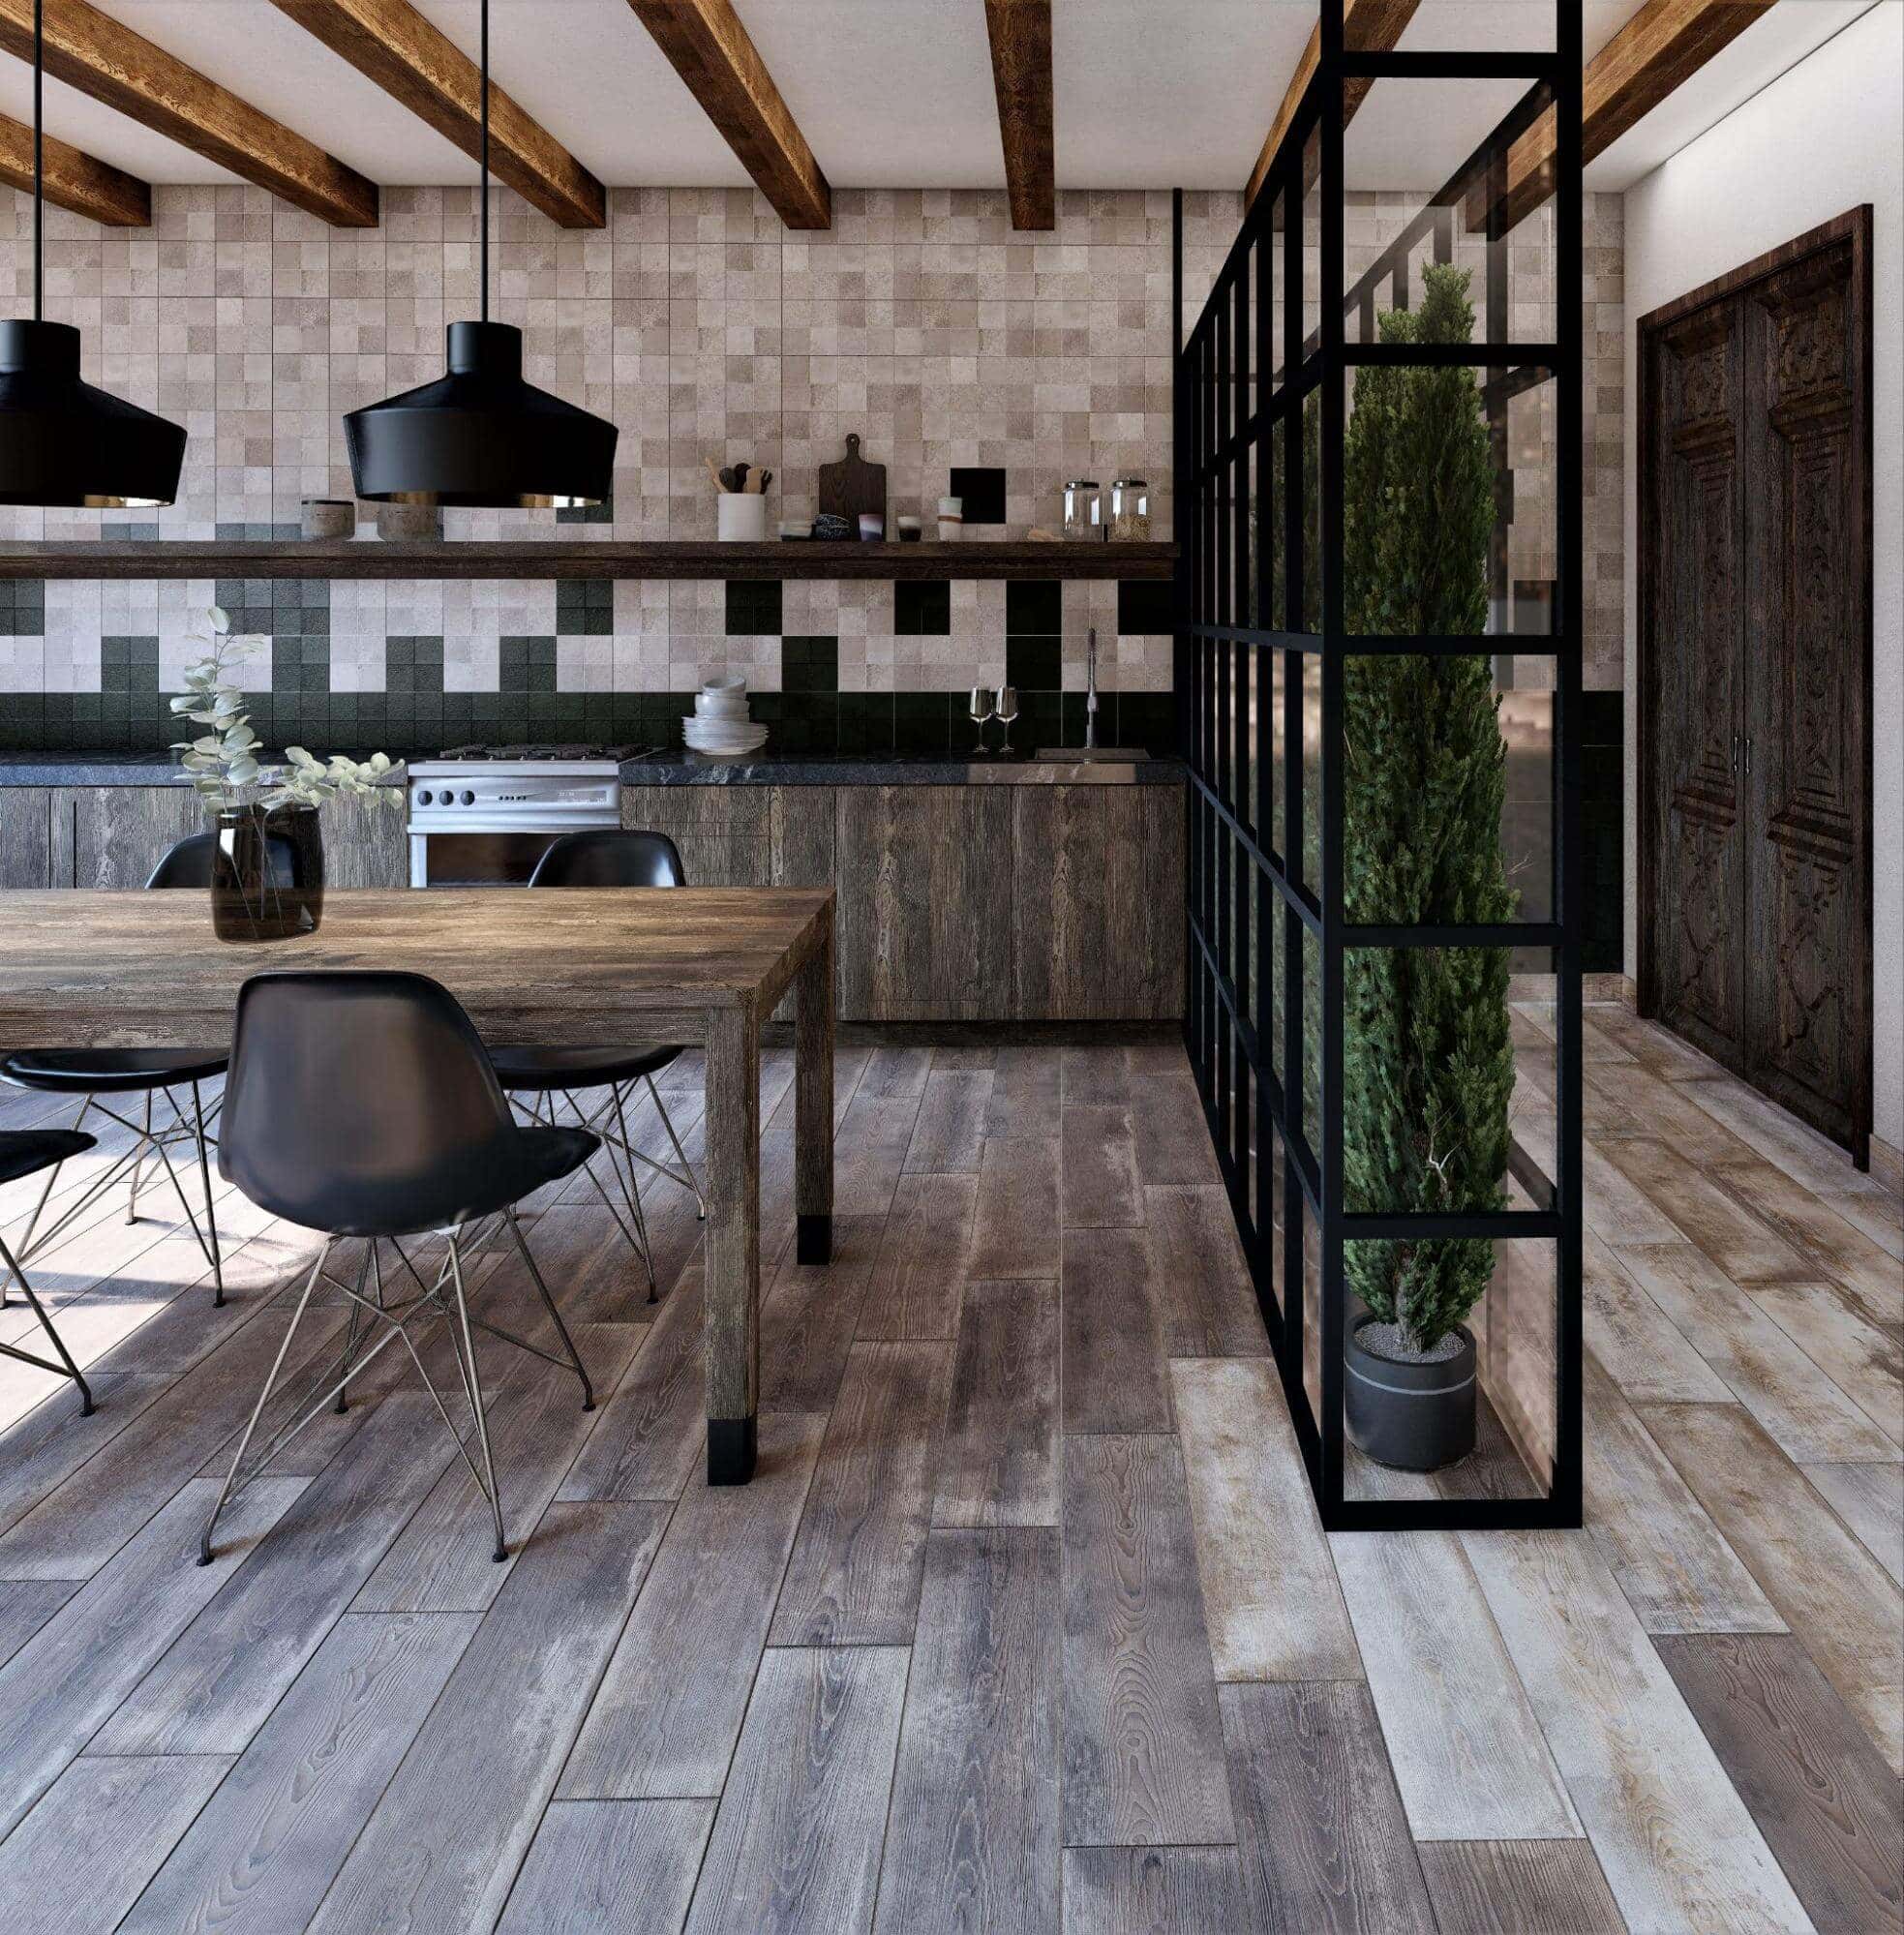 Kitchen with running bond floor tile pattern